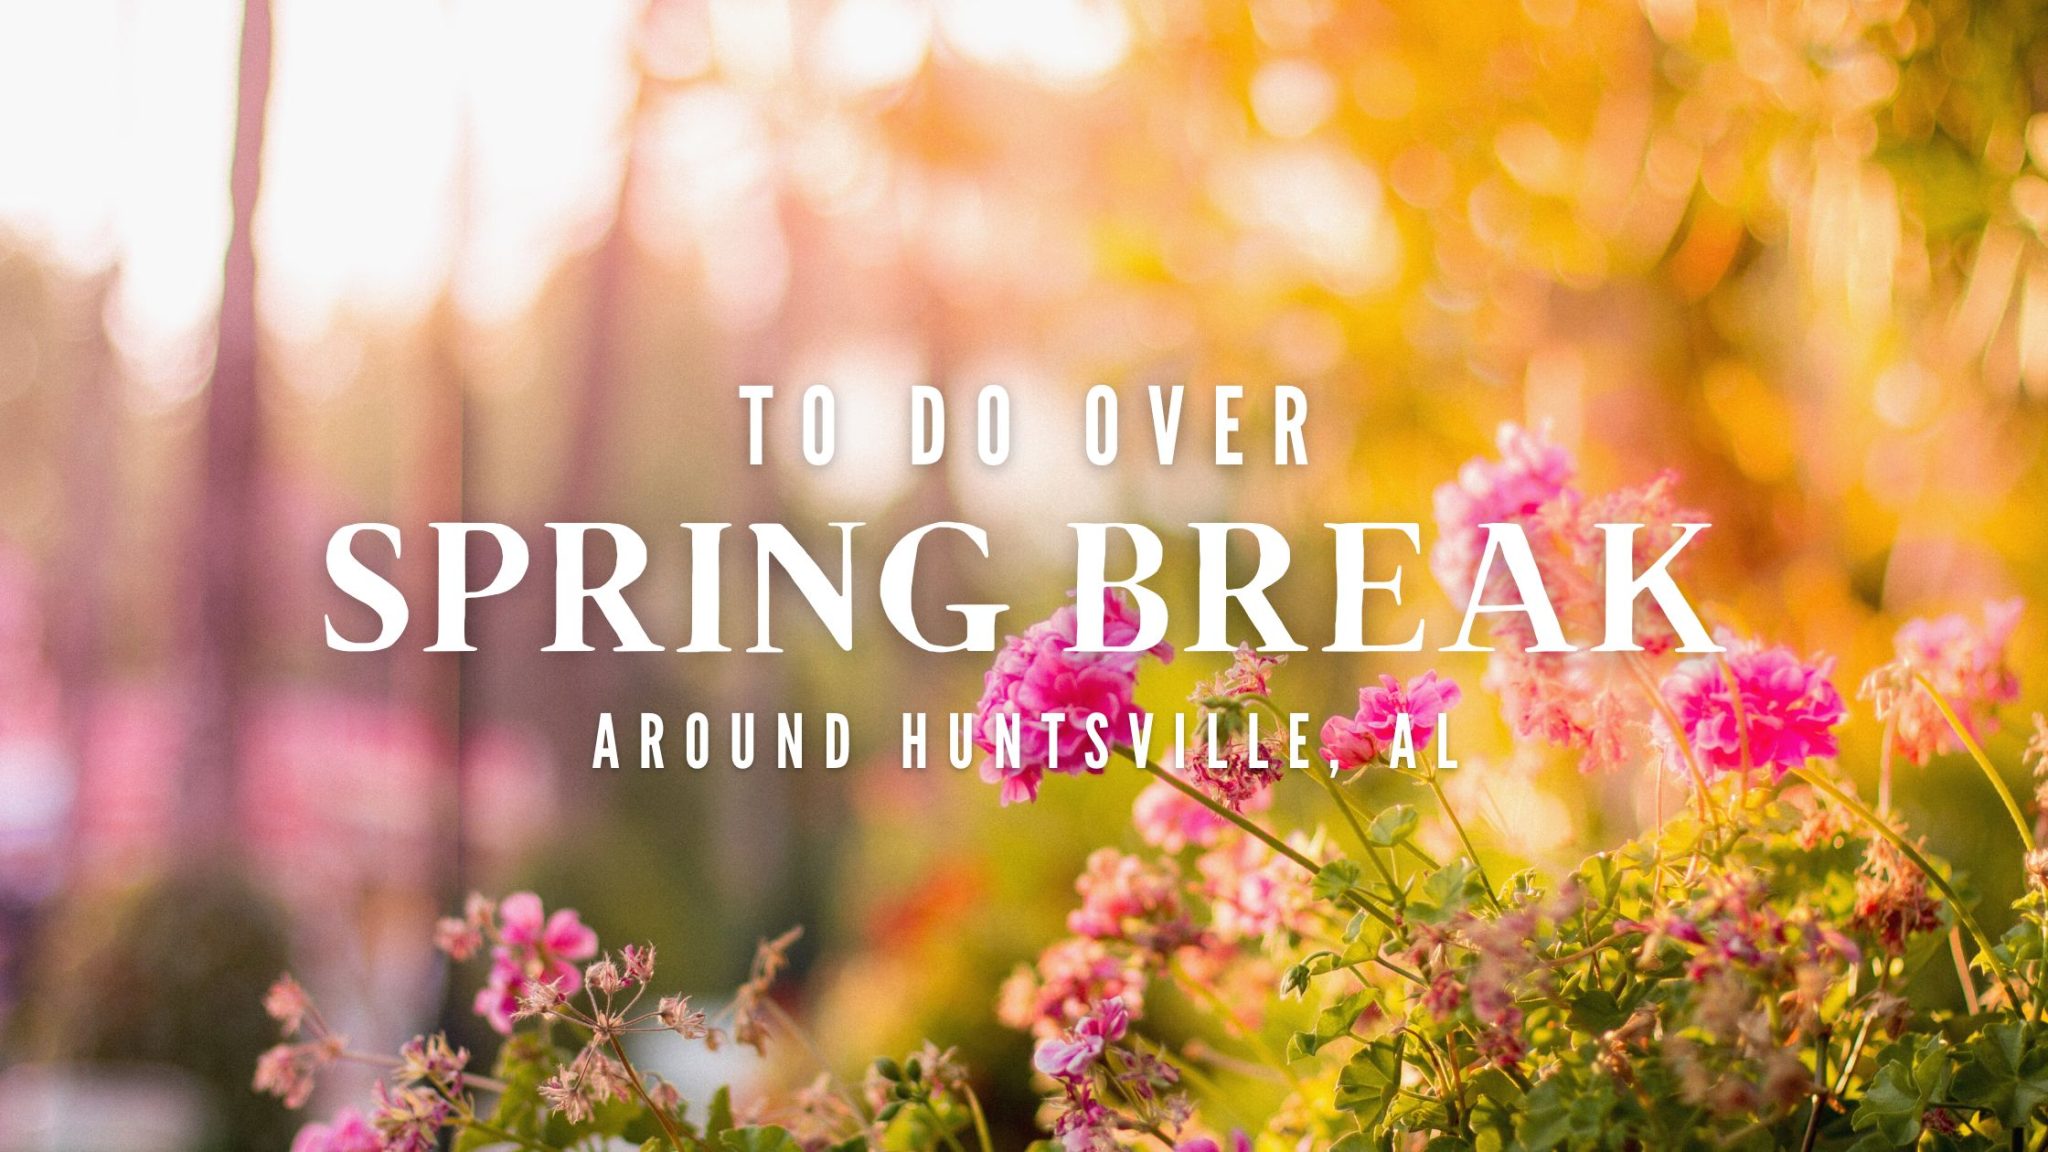 To Do Over Spring Break Around Huntsville, AL